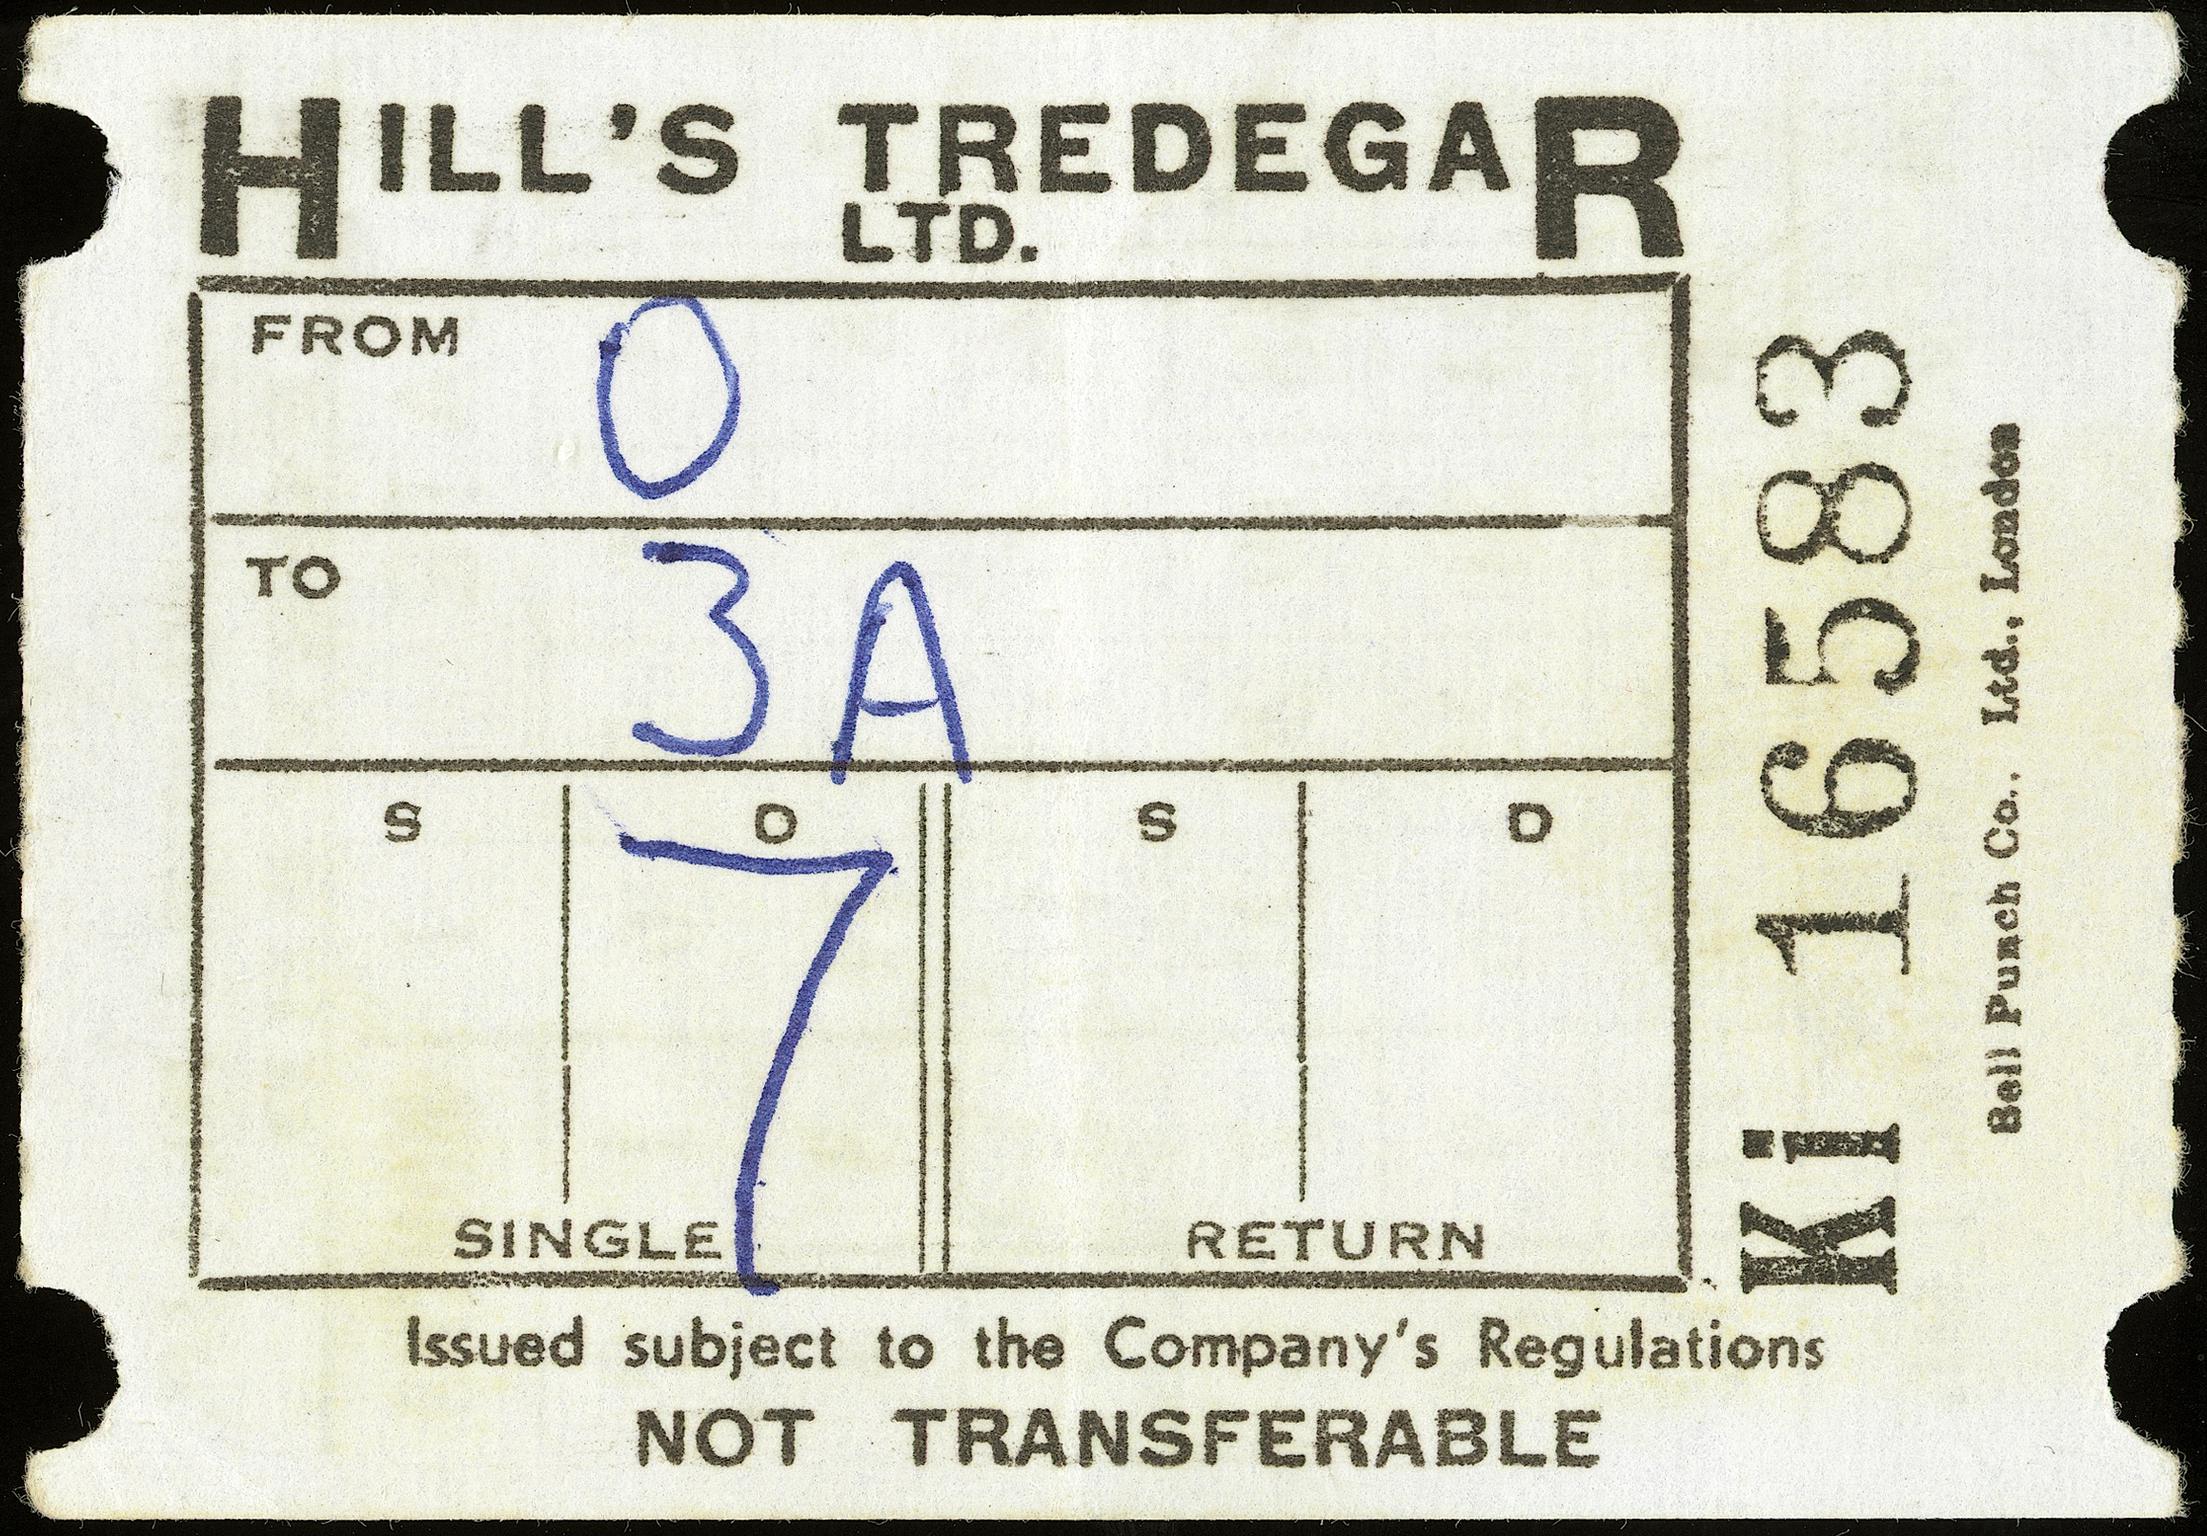 Hill's Tredegar Ltd. bus ticket